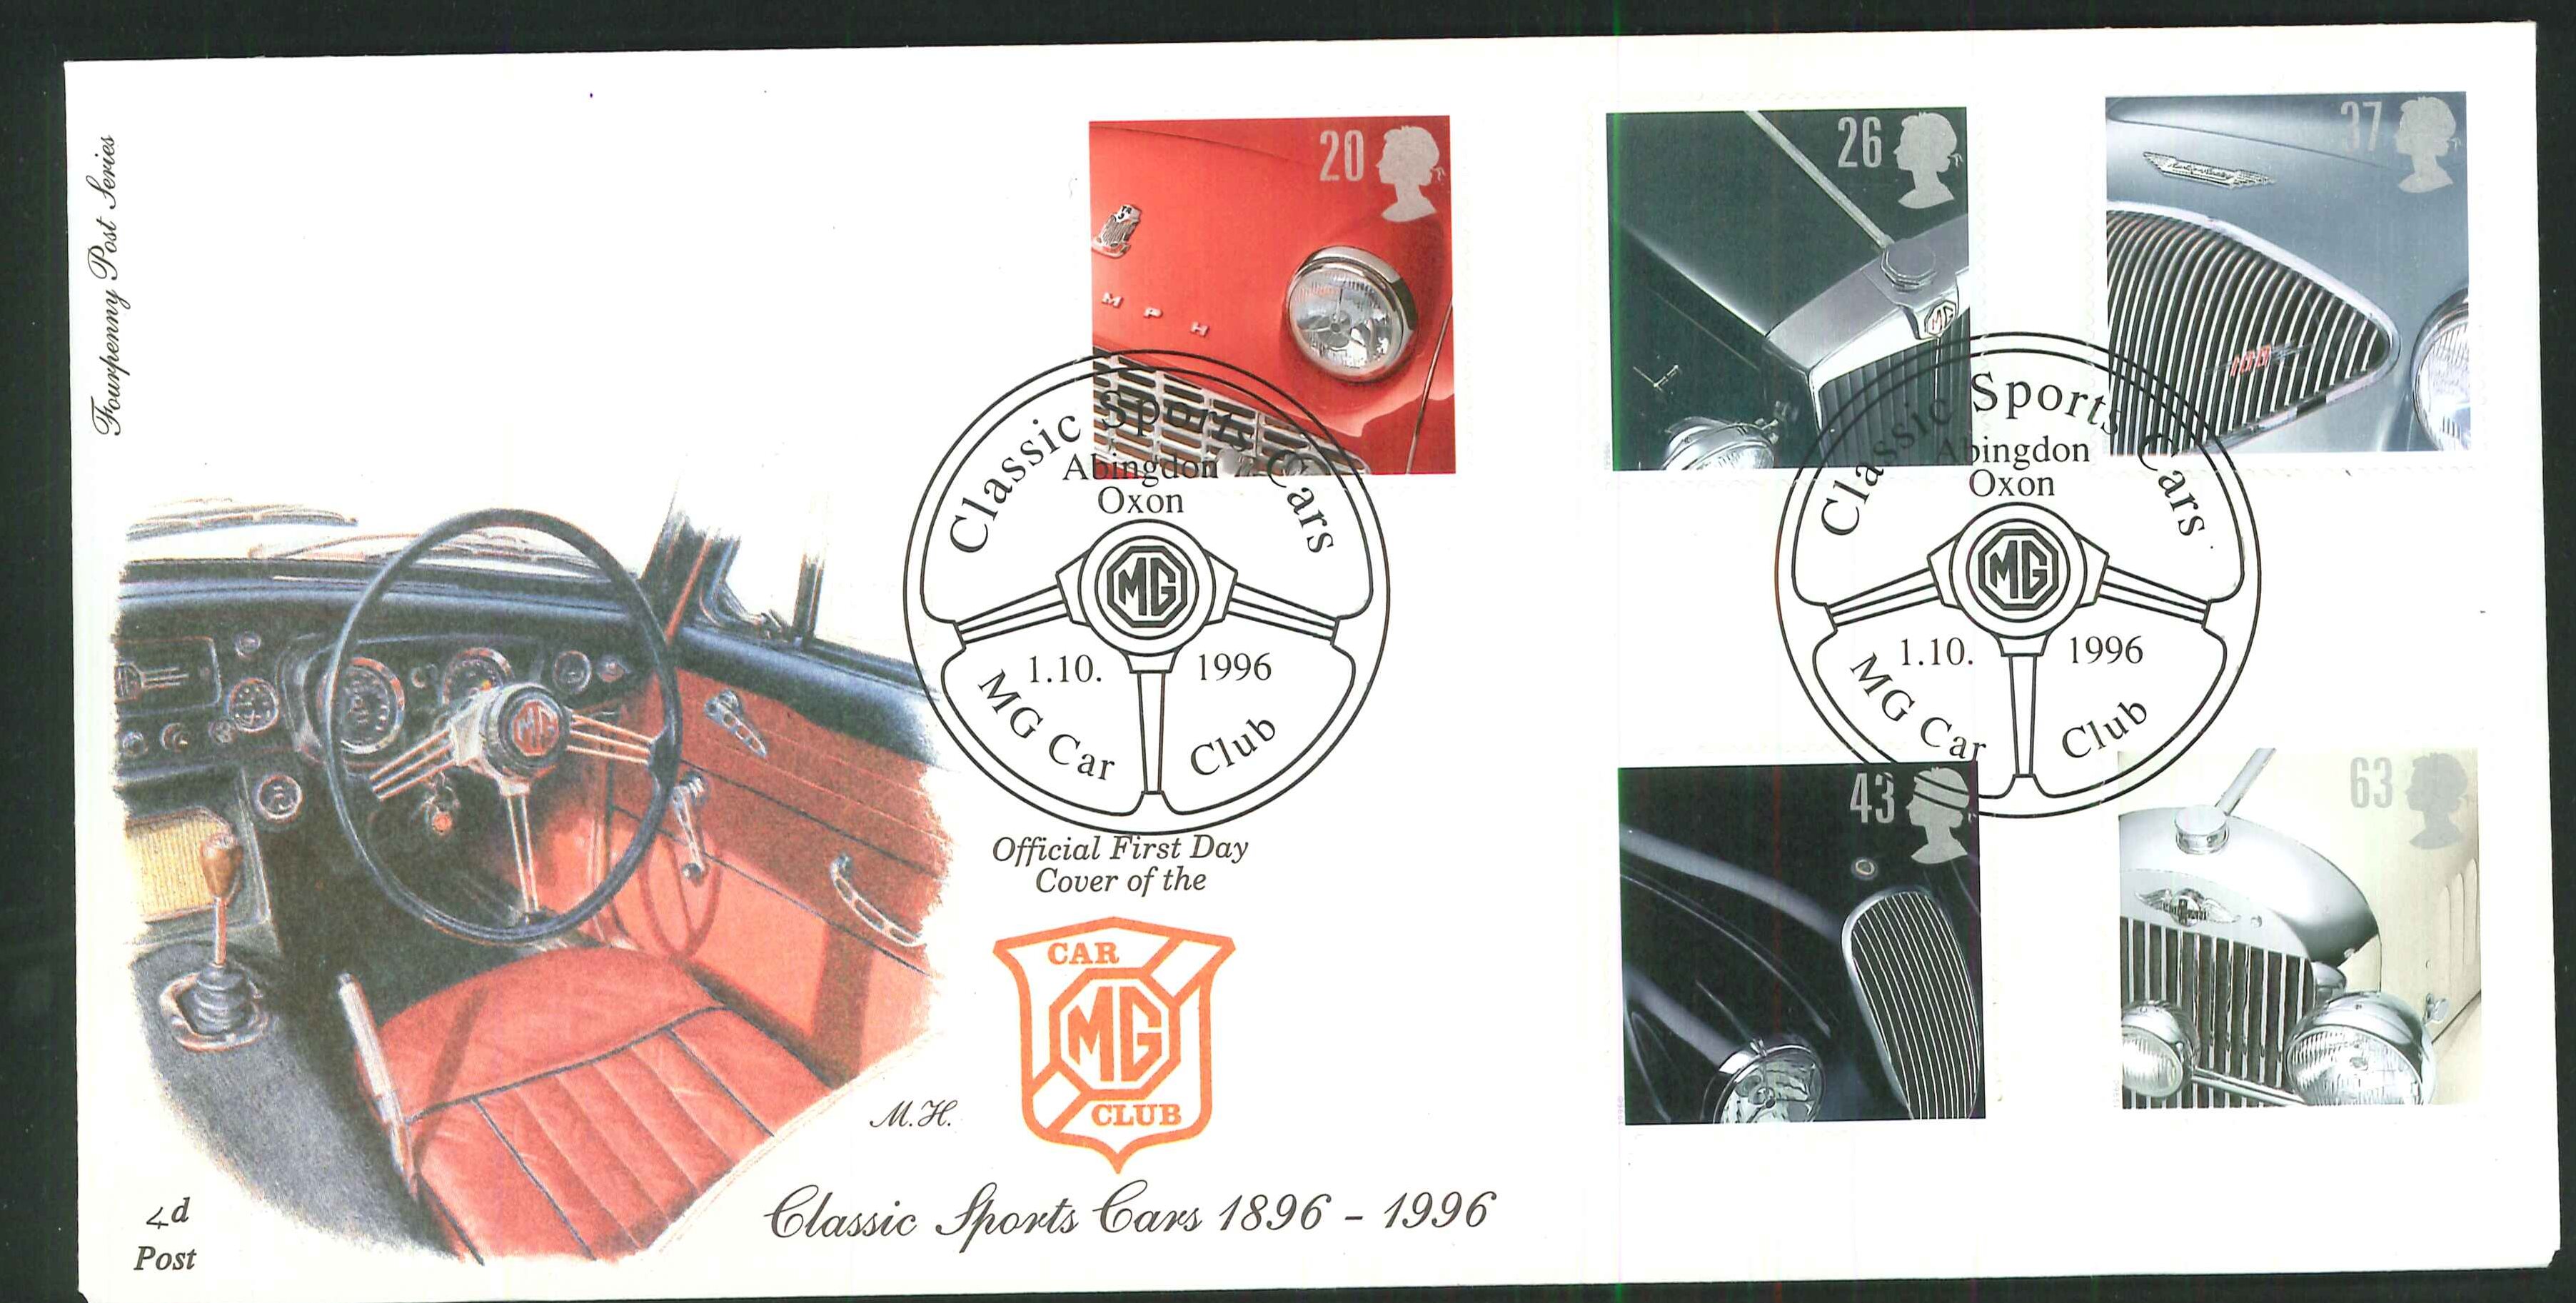 1996 - Classic Sports Cars 1896 - 1996, First Day Cover - MG Car Club, Abingdon, Oxon Postmark